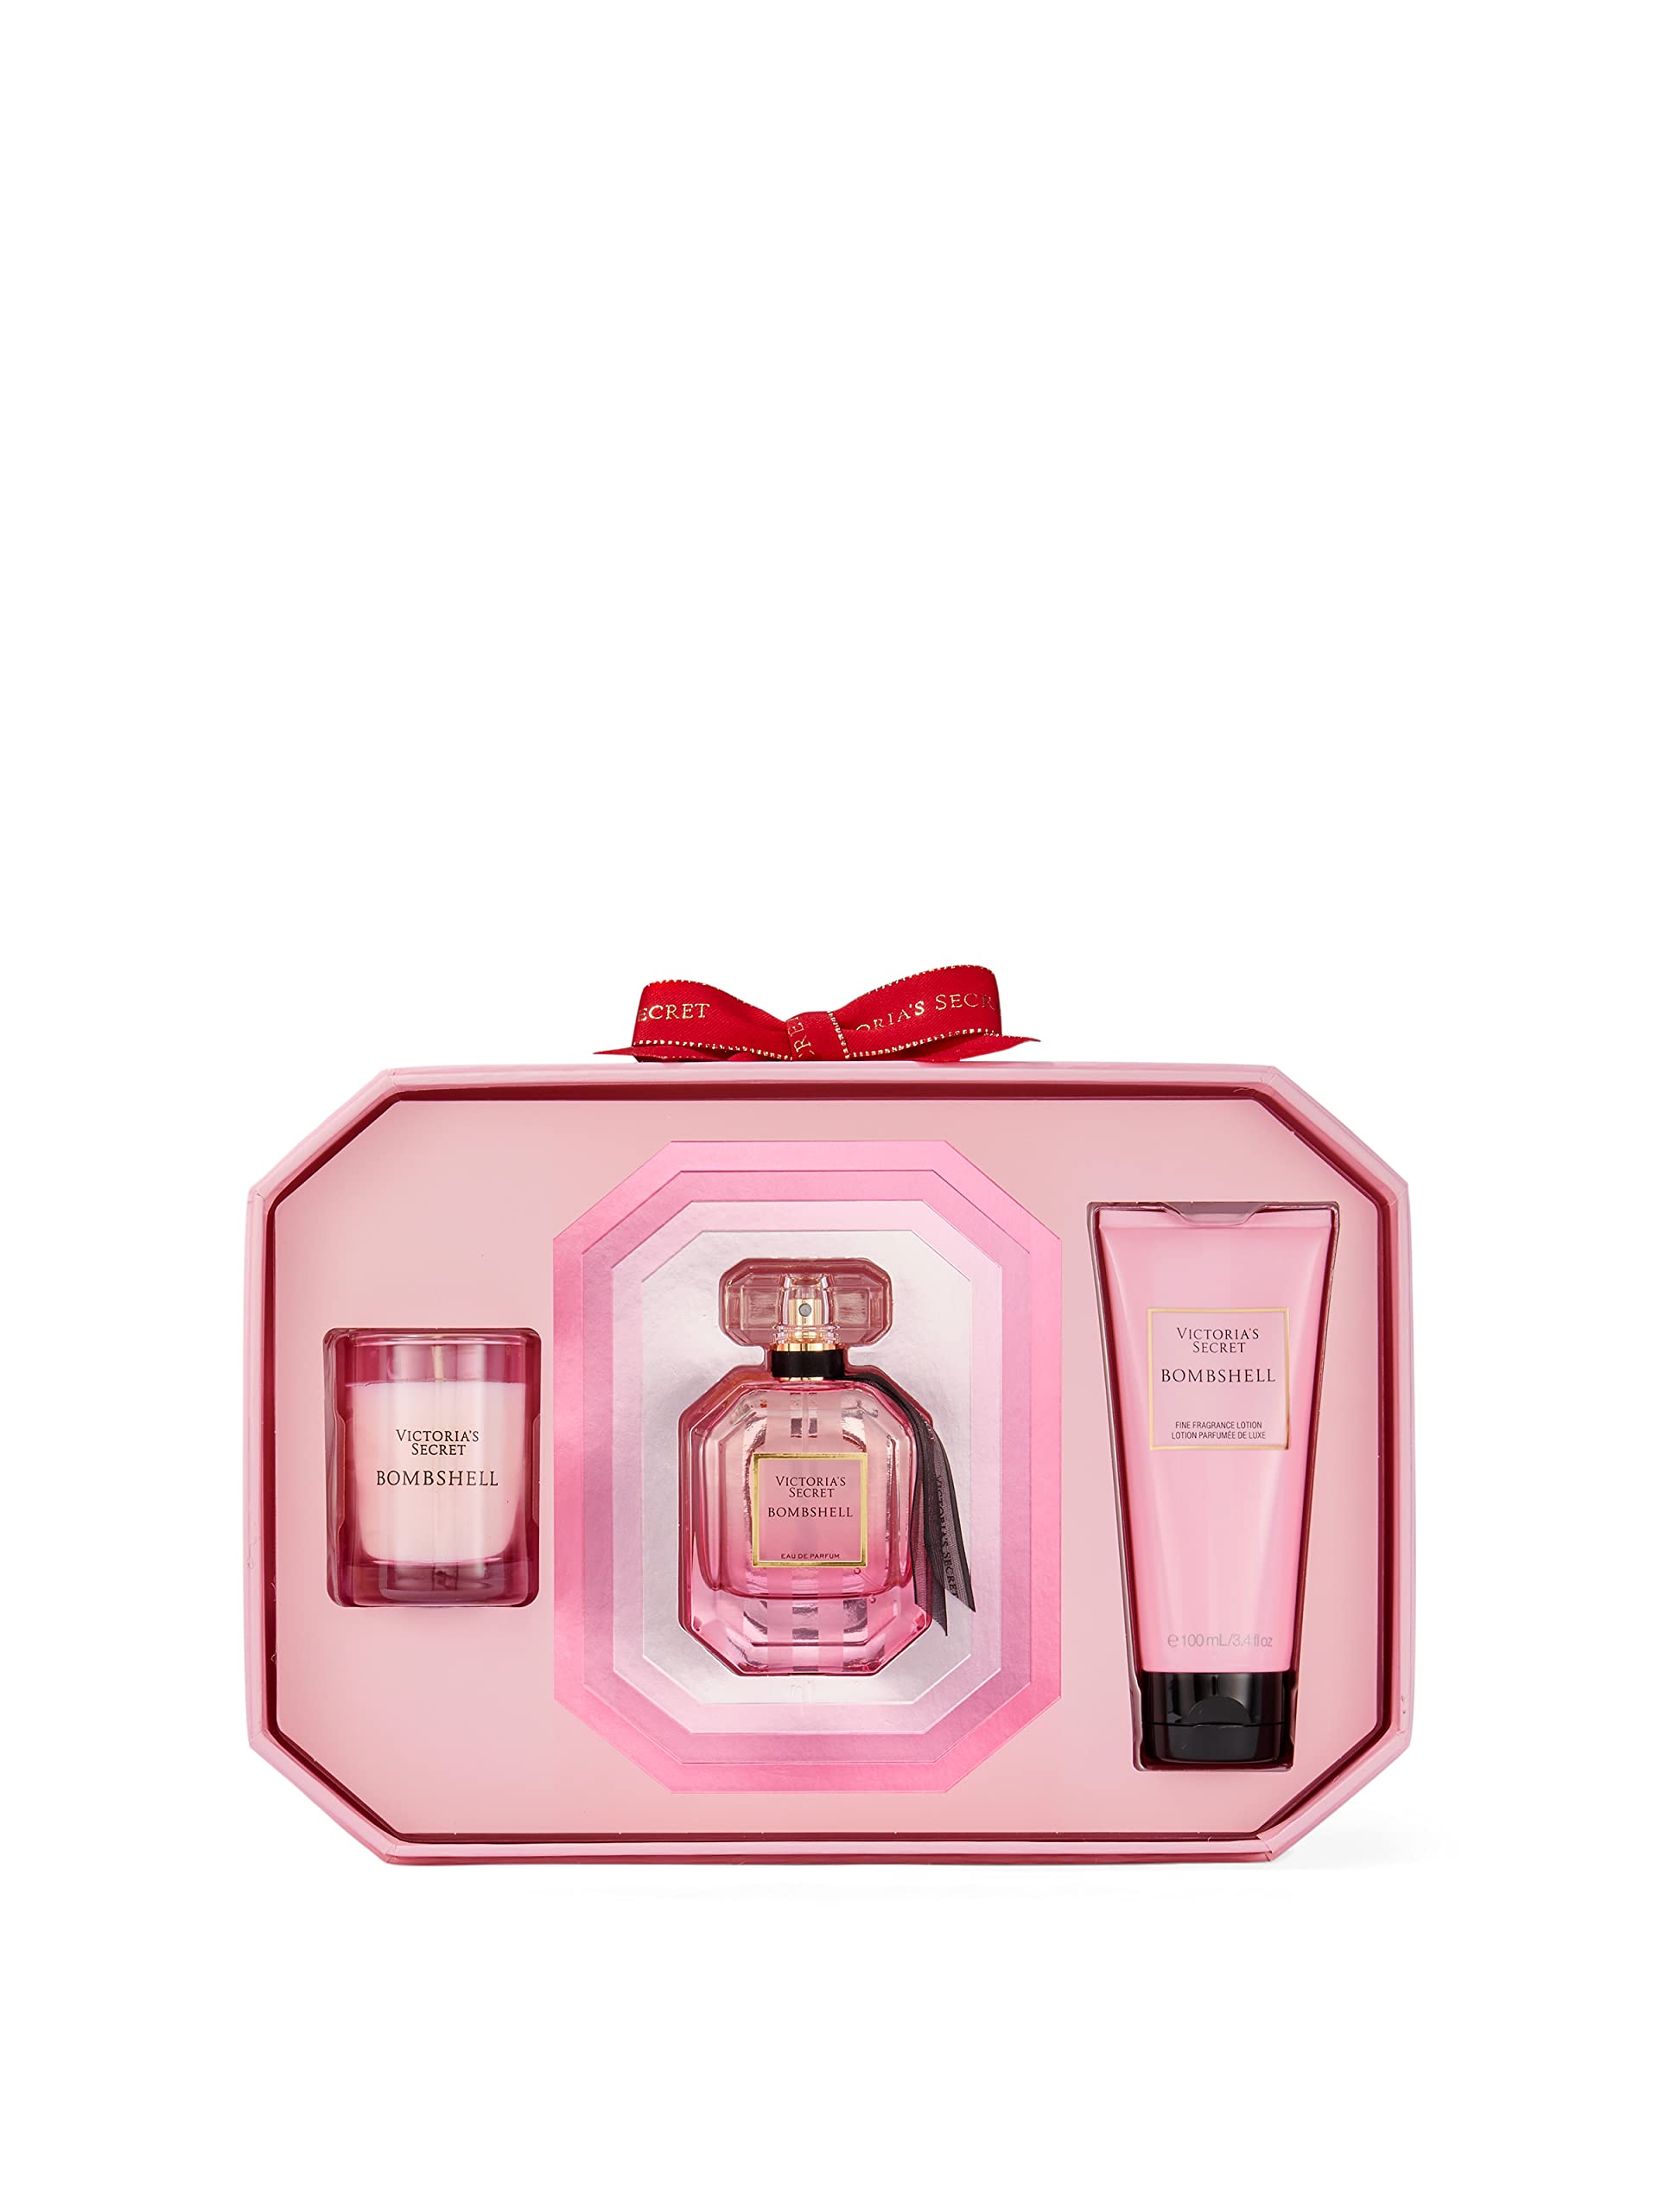 Victoria's Secret Bombshell 3 Piece Luxe Fragrance Gift Set: 1.7